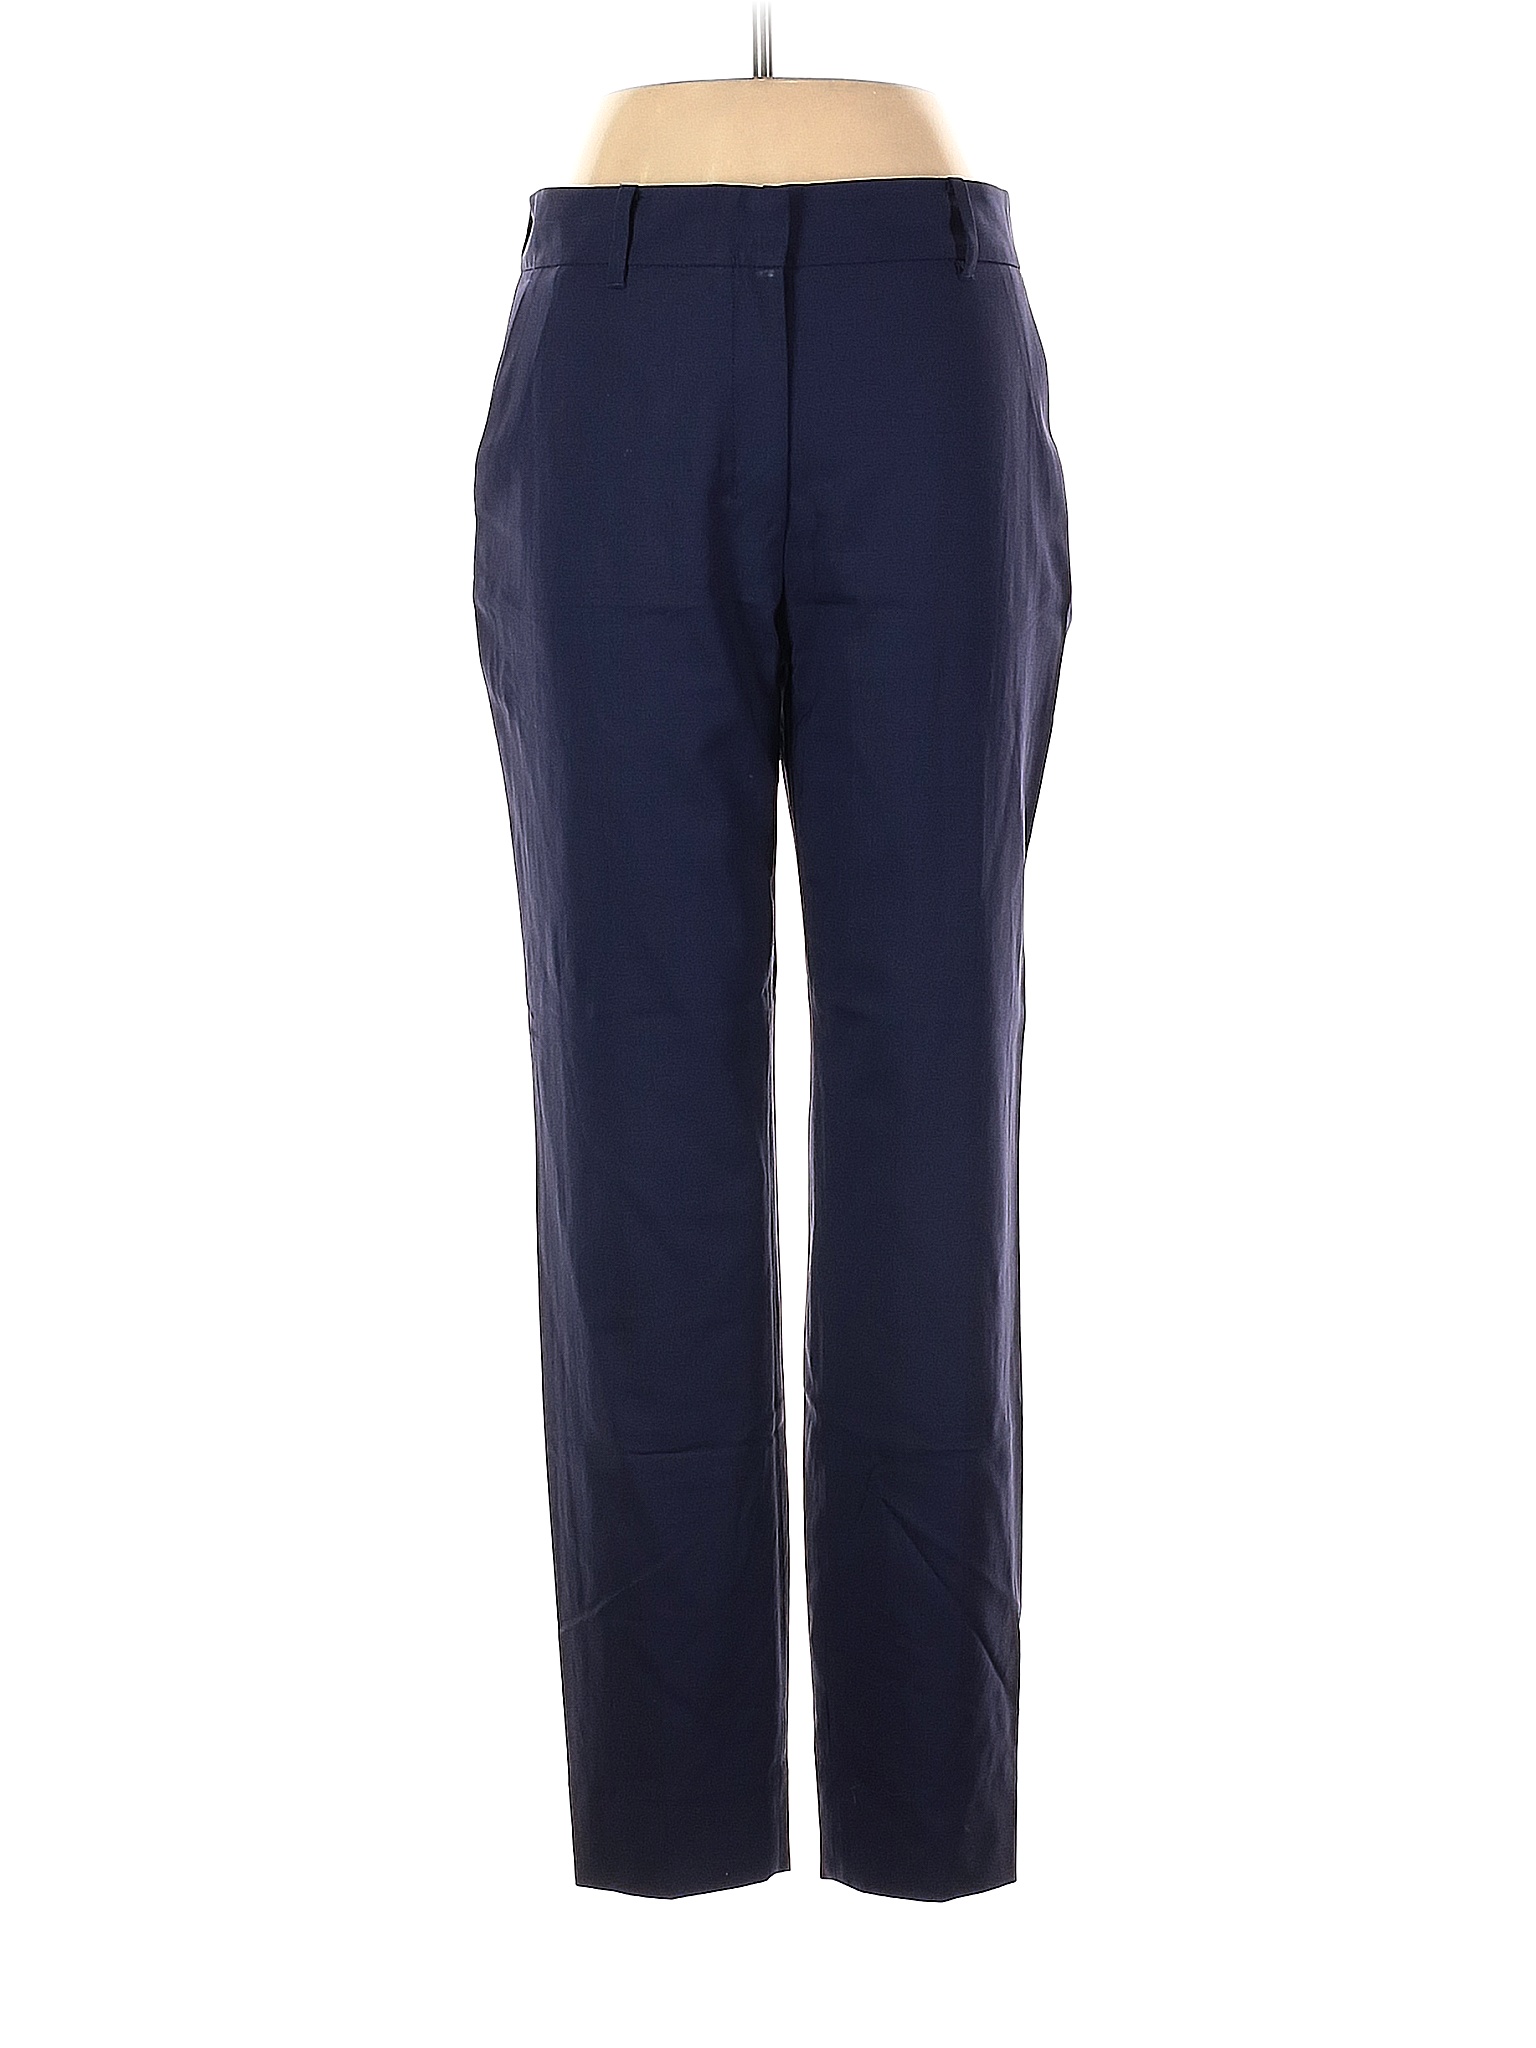 MM. LaFleur Solid Blue Wool Pants Size 4 - 80% off | thredUP